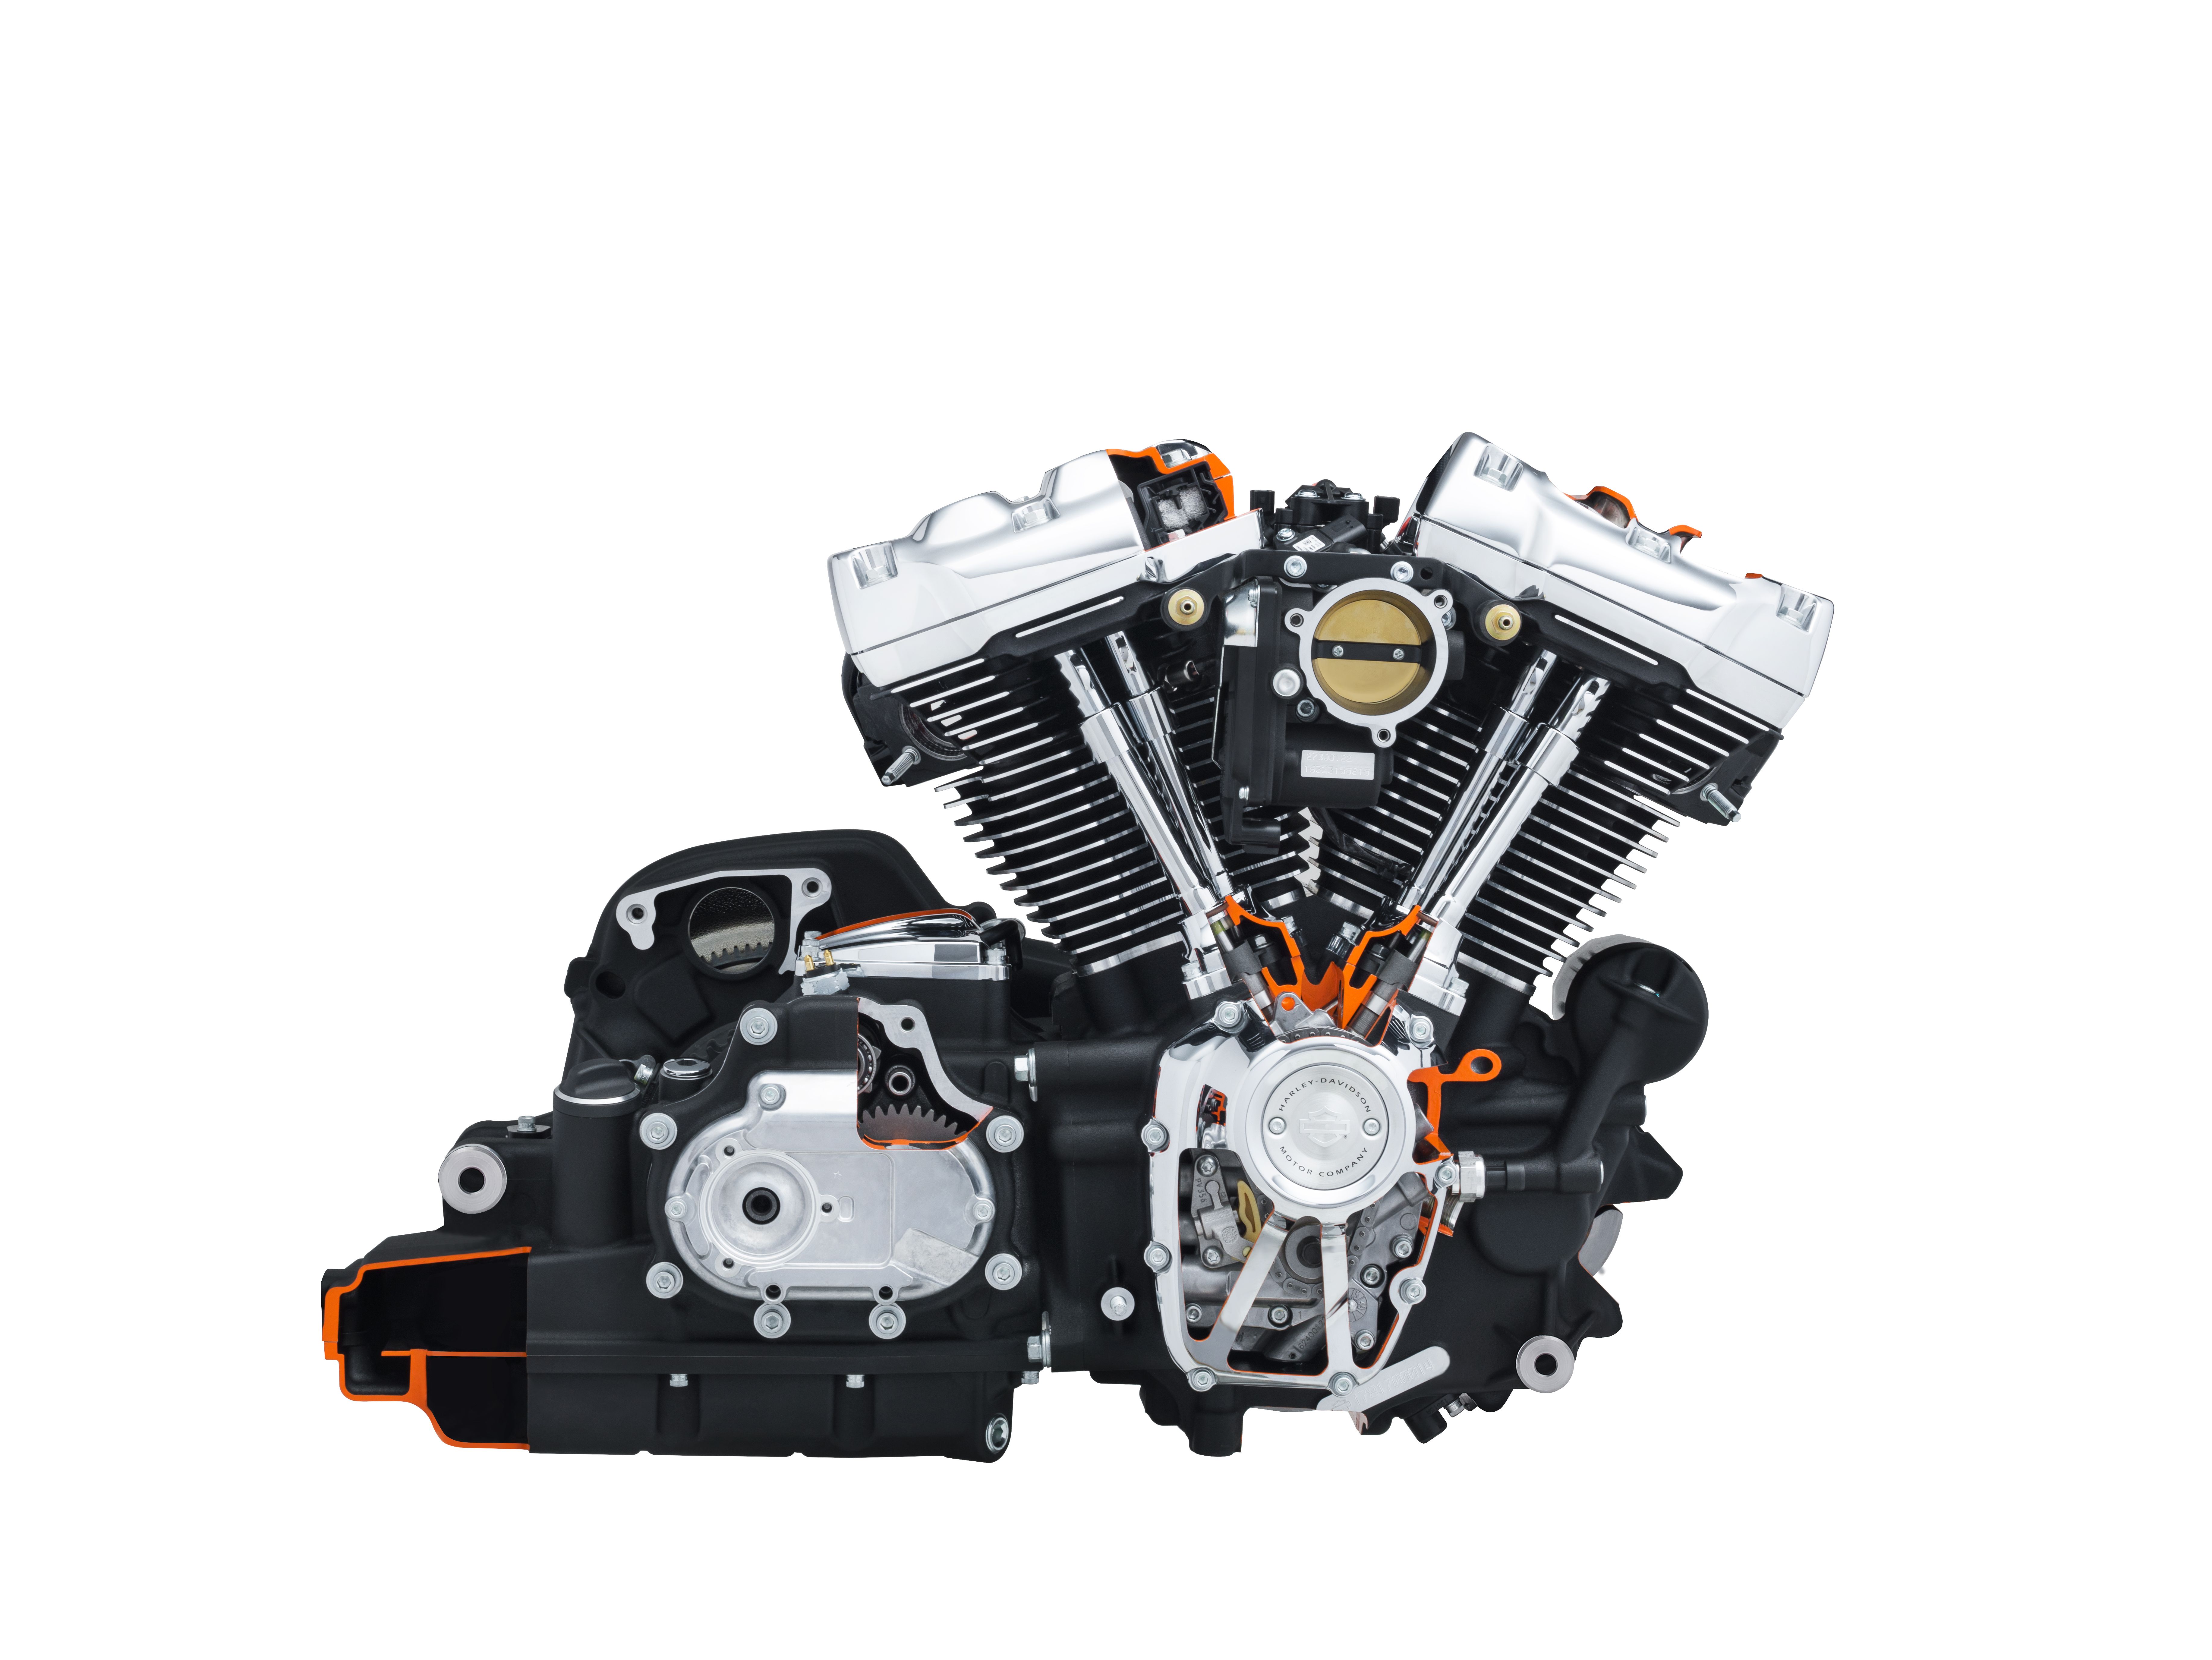 Harley Davidson S New Engine Motorcycle Cruiser